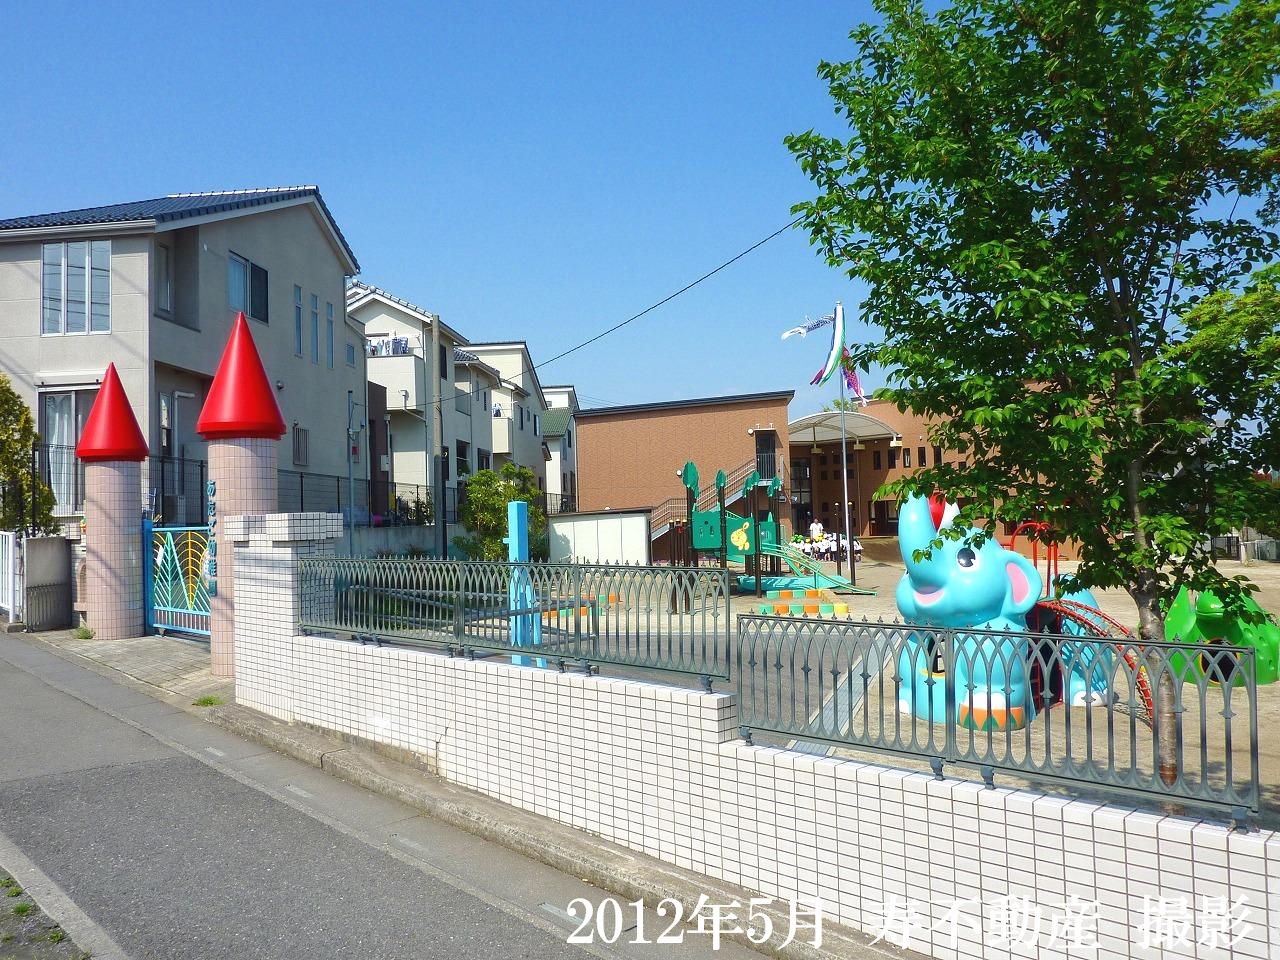 kindergarten ・ Nursery. Atago kindergarten (kindergarten ・ 181m to the nursery)